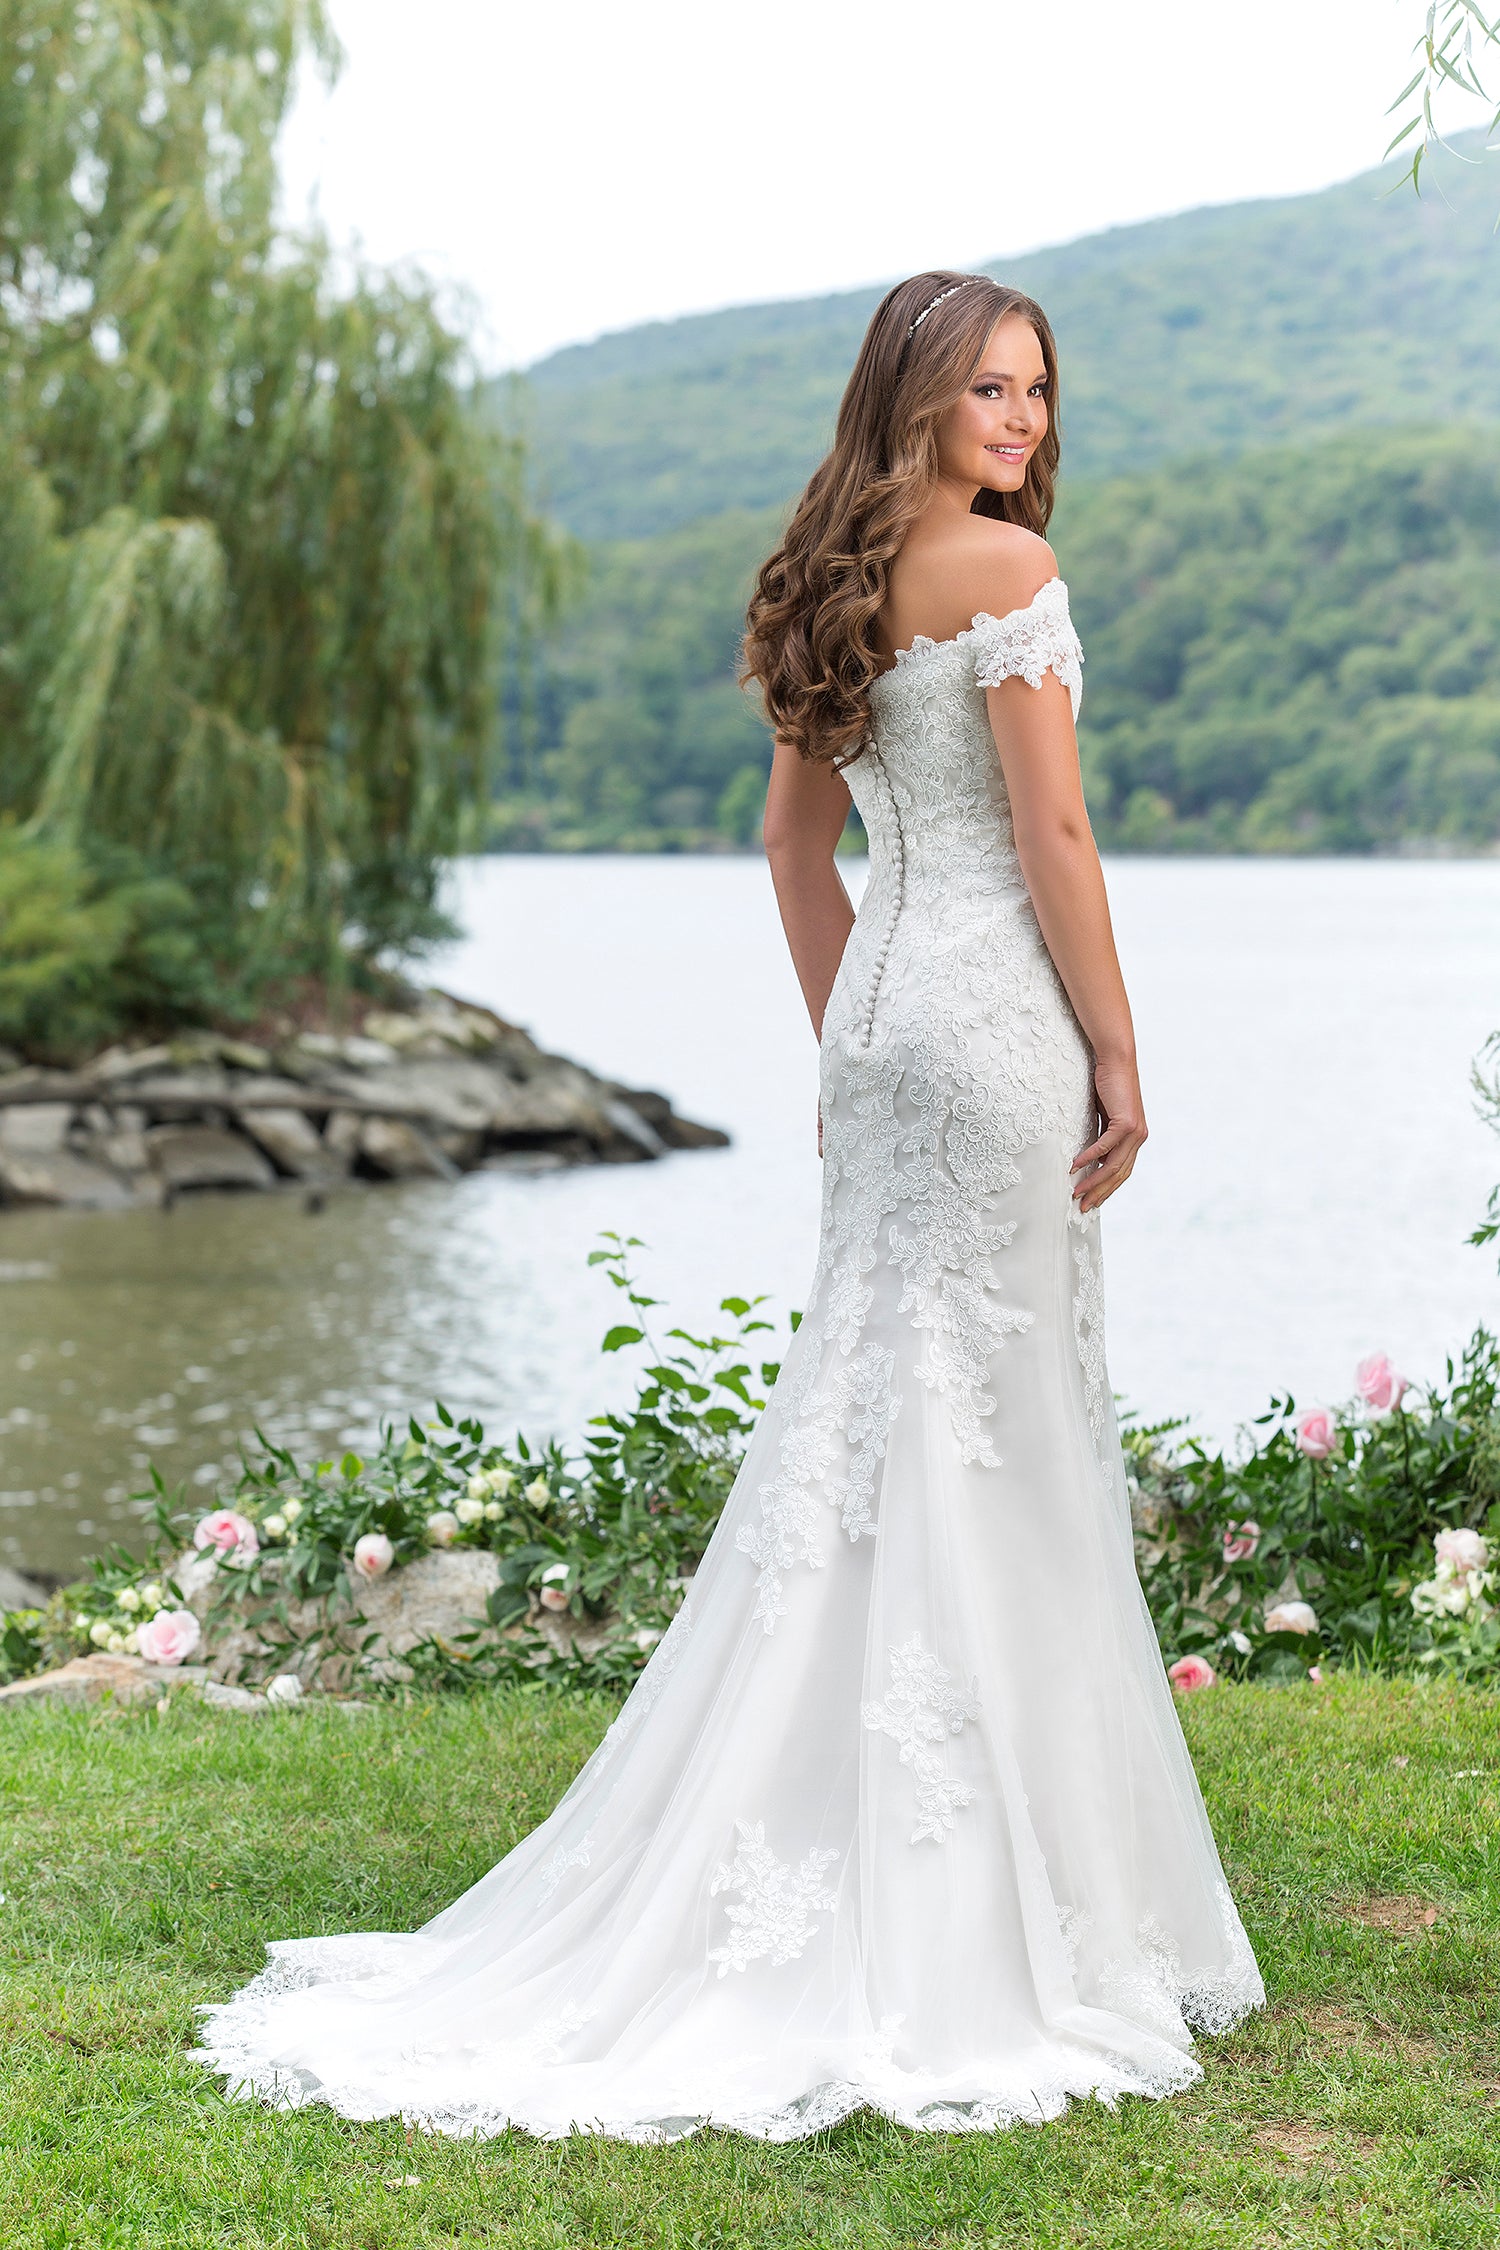 *NEW* Sweetheart Designer Wedding Gown - #6155